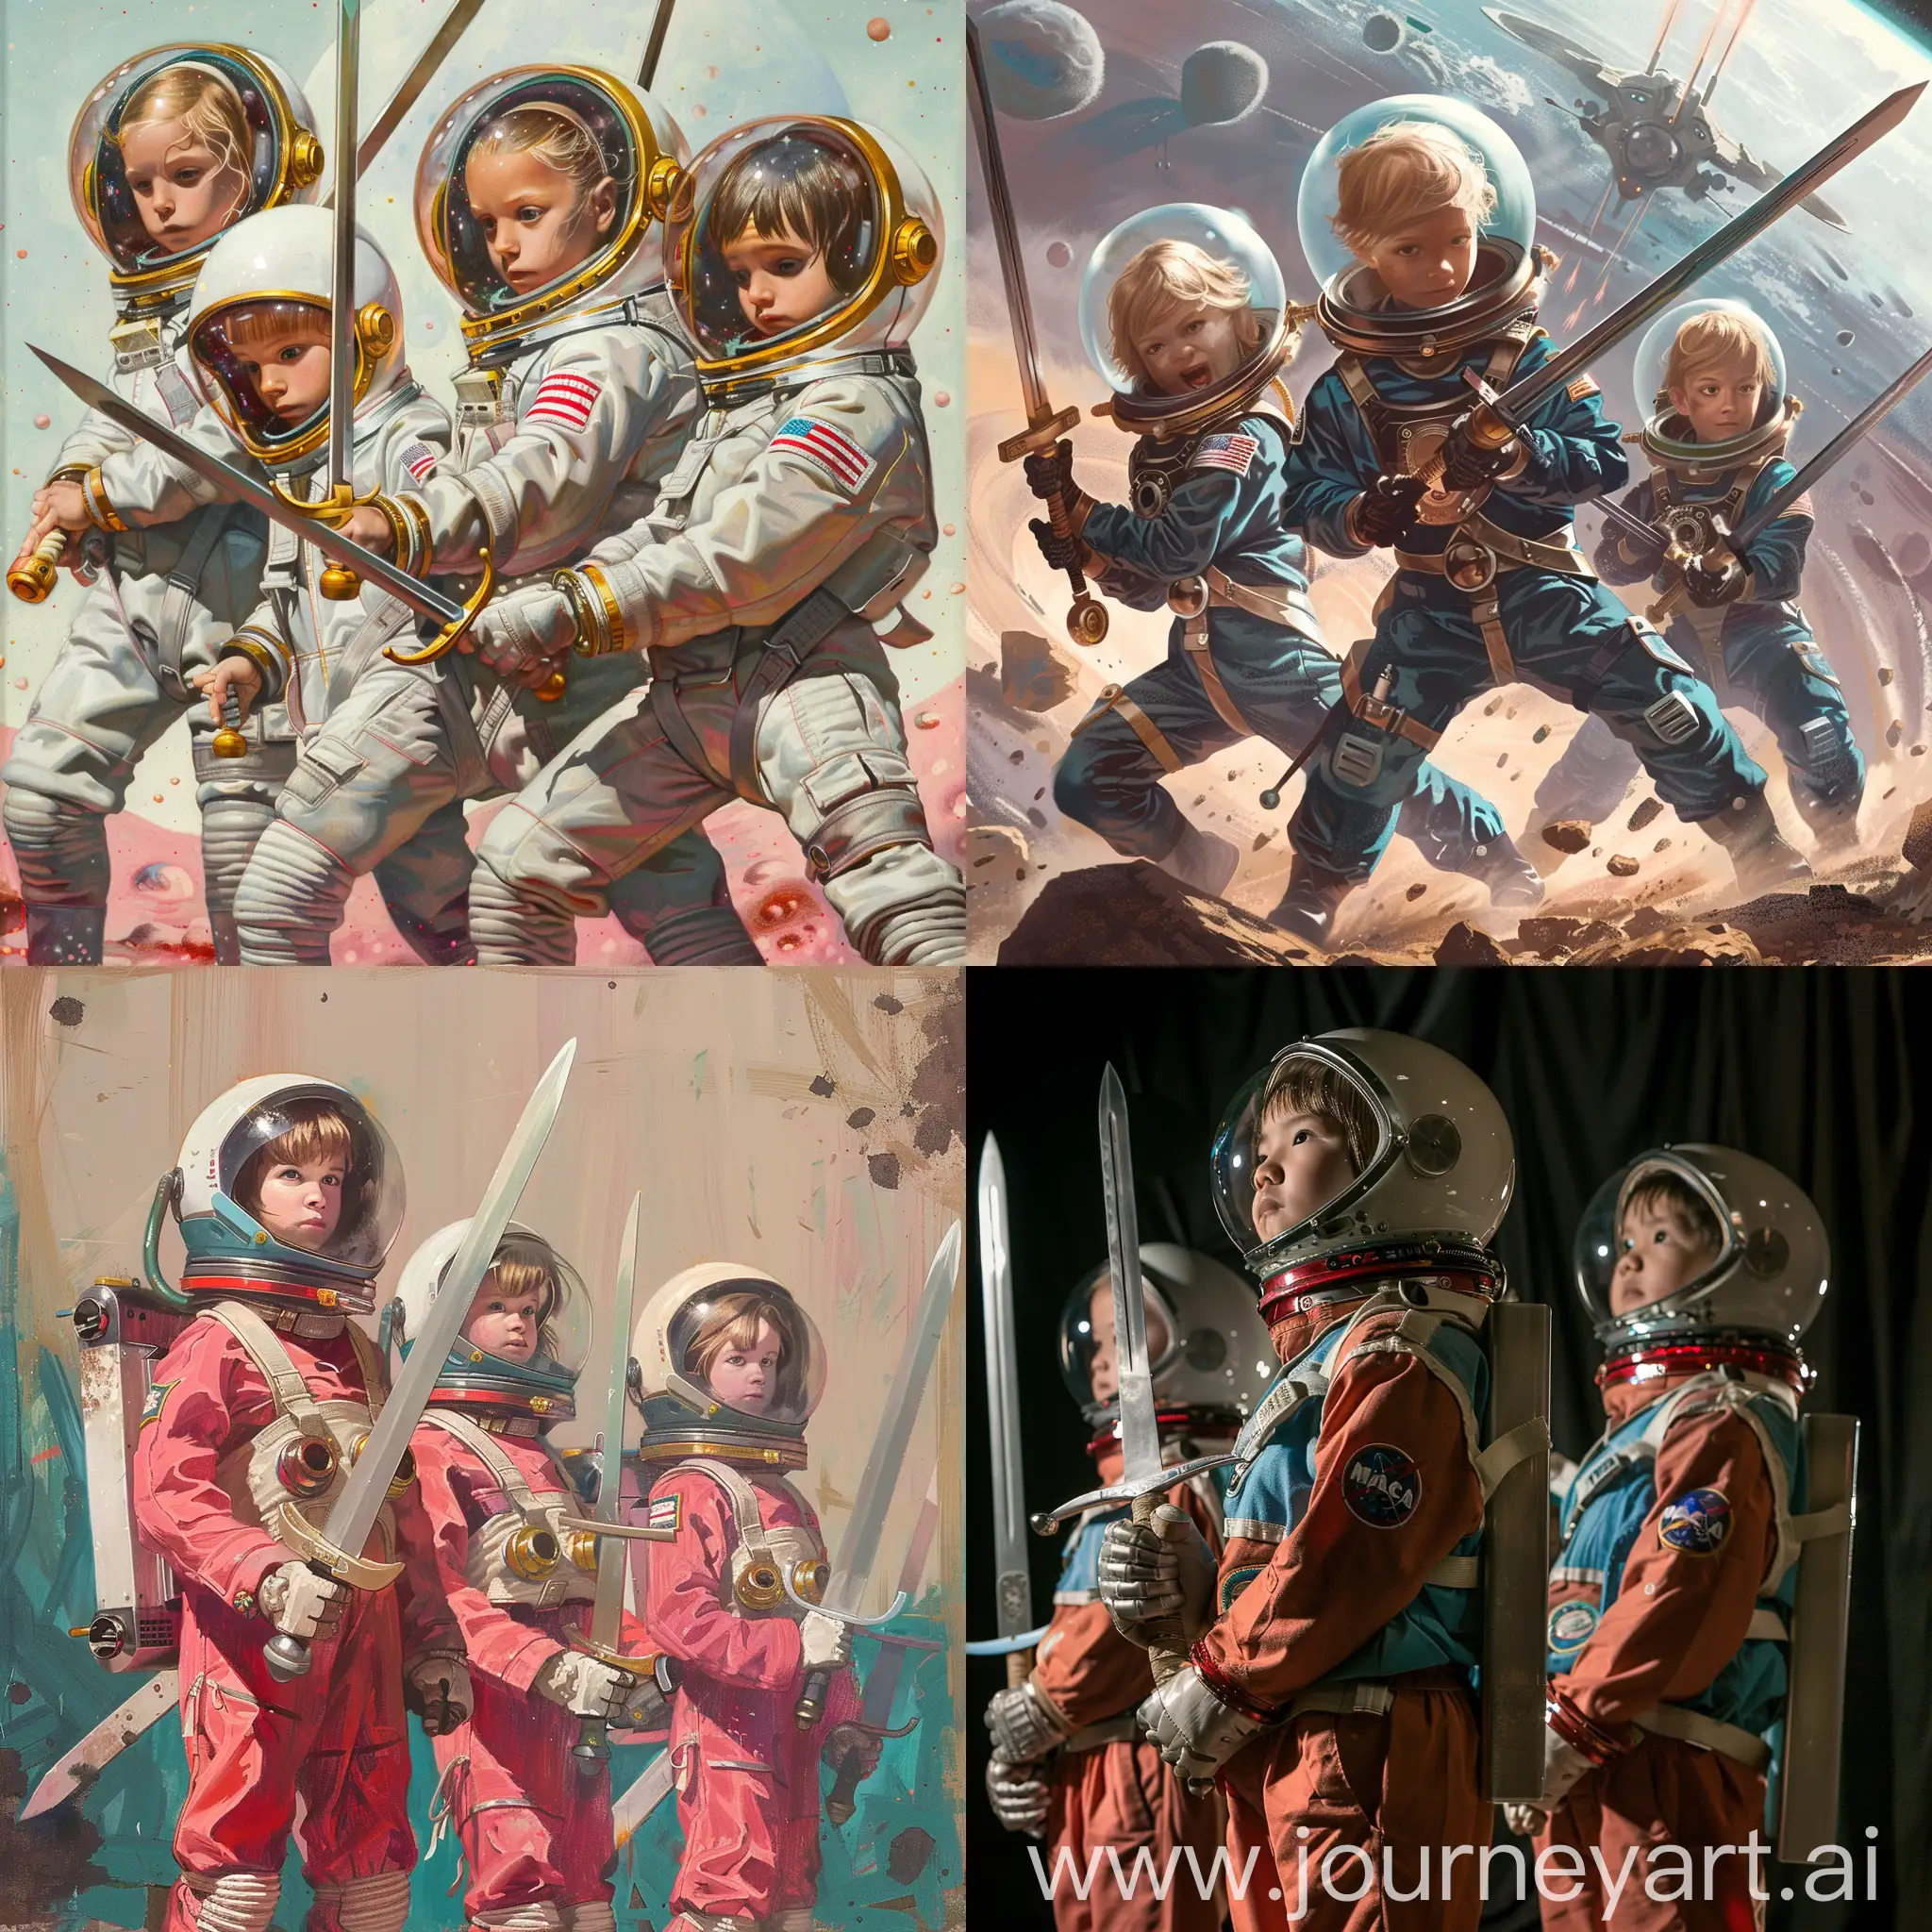 Adventurous-SpaceClad-Kids-Wielding-Swords